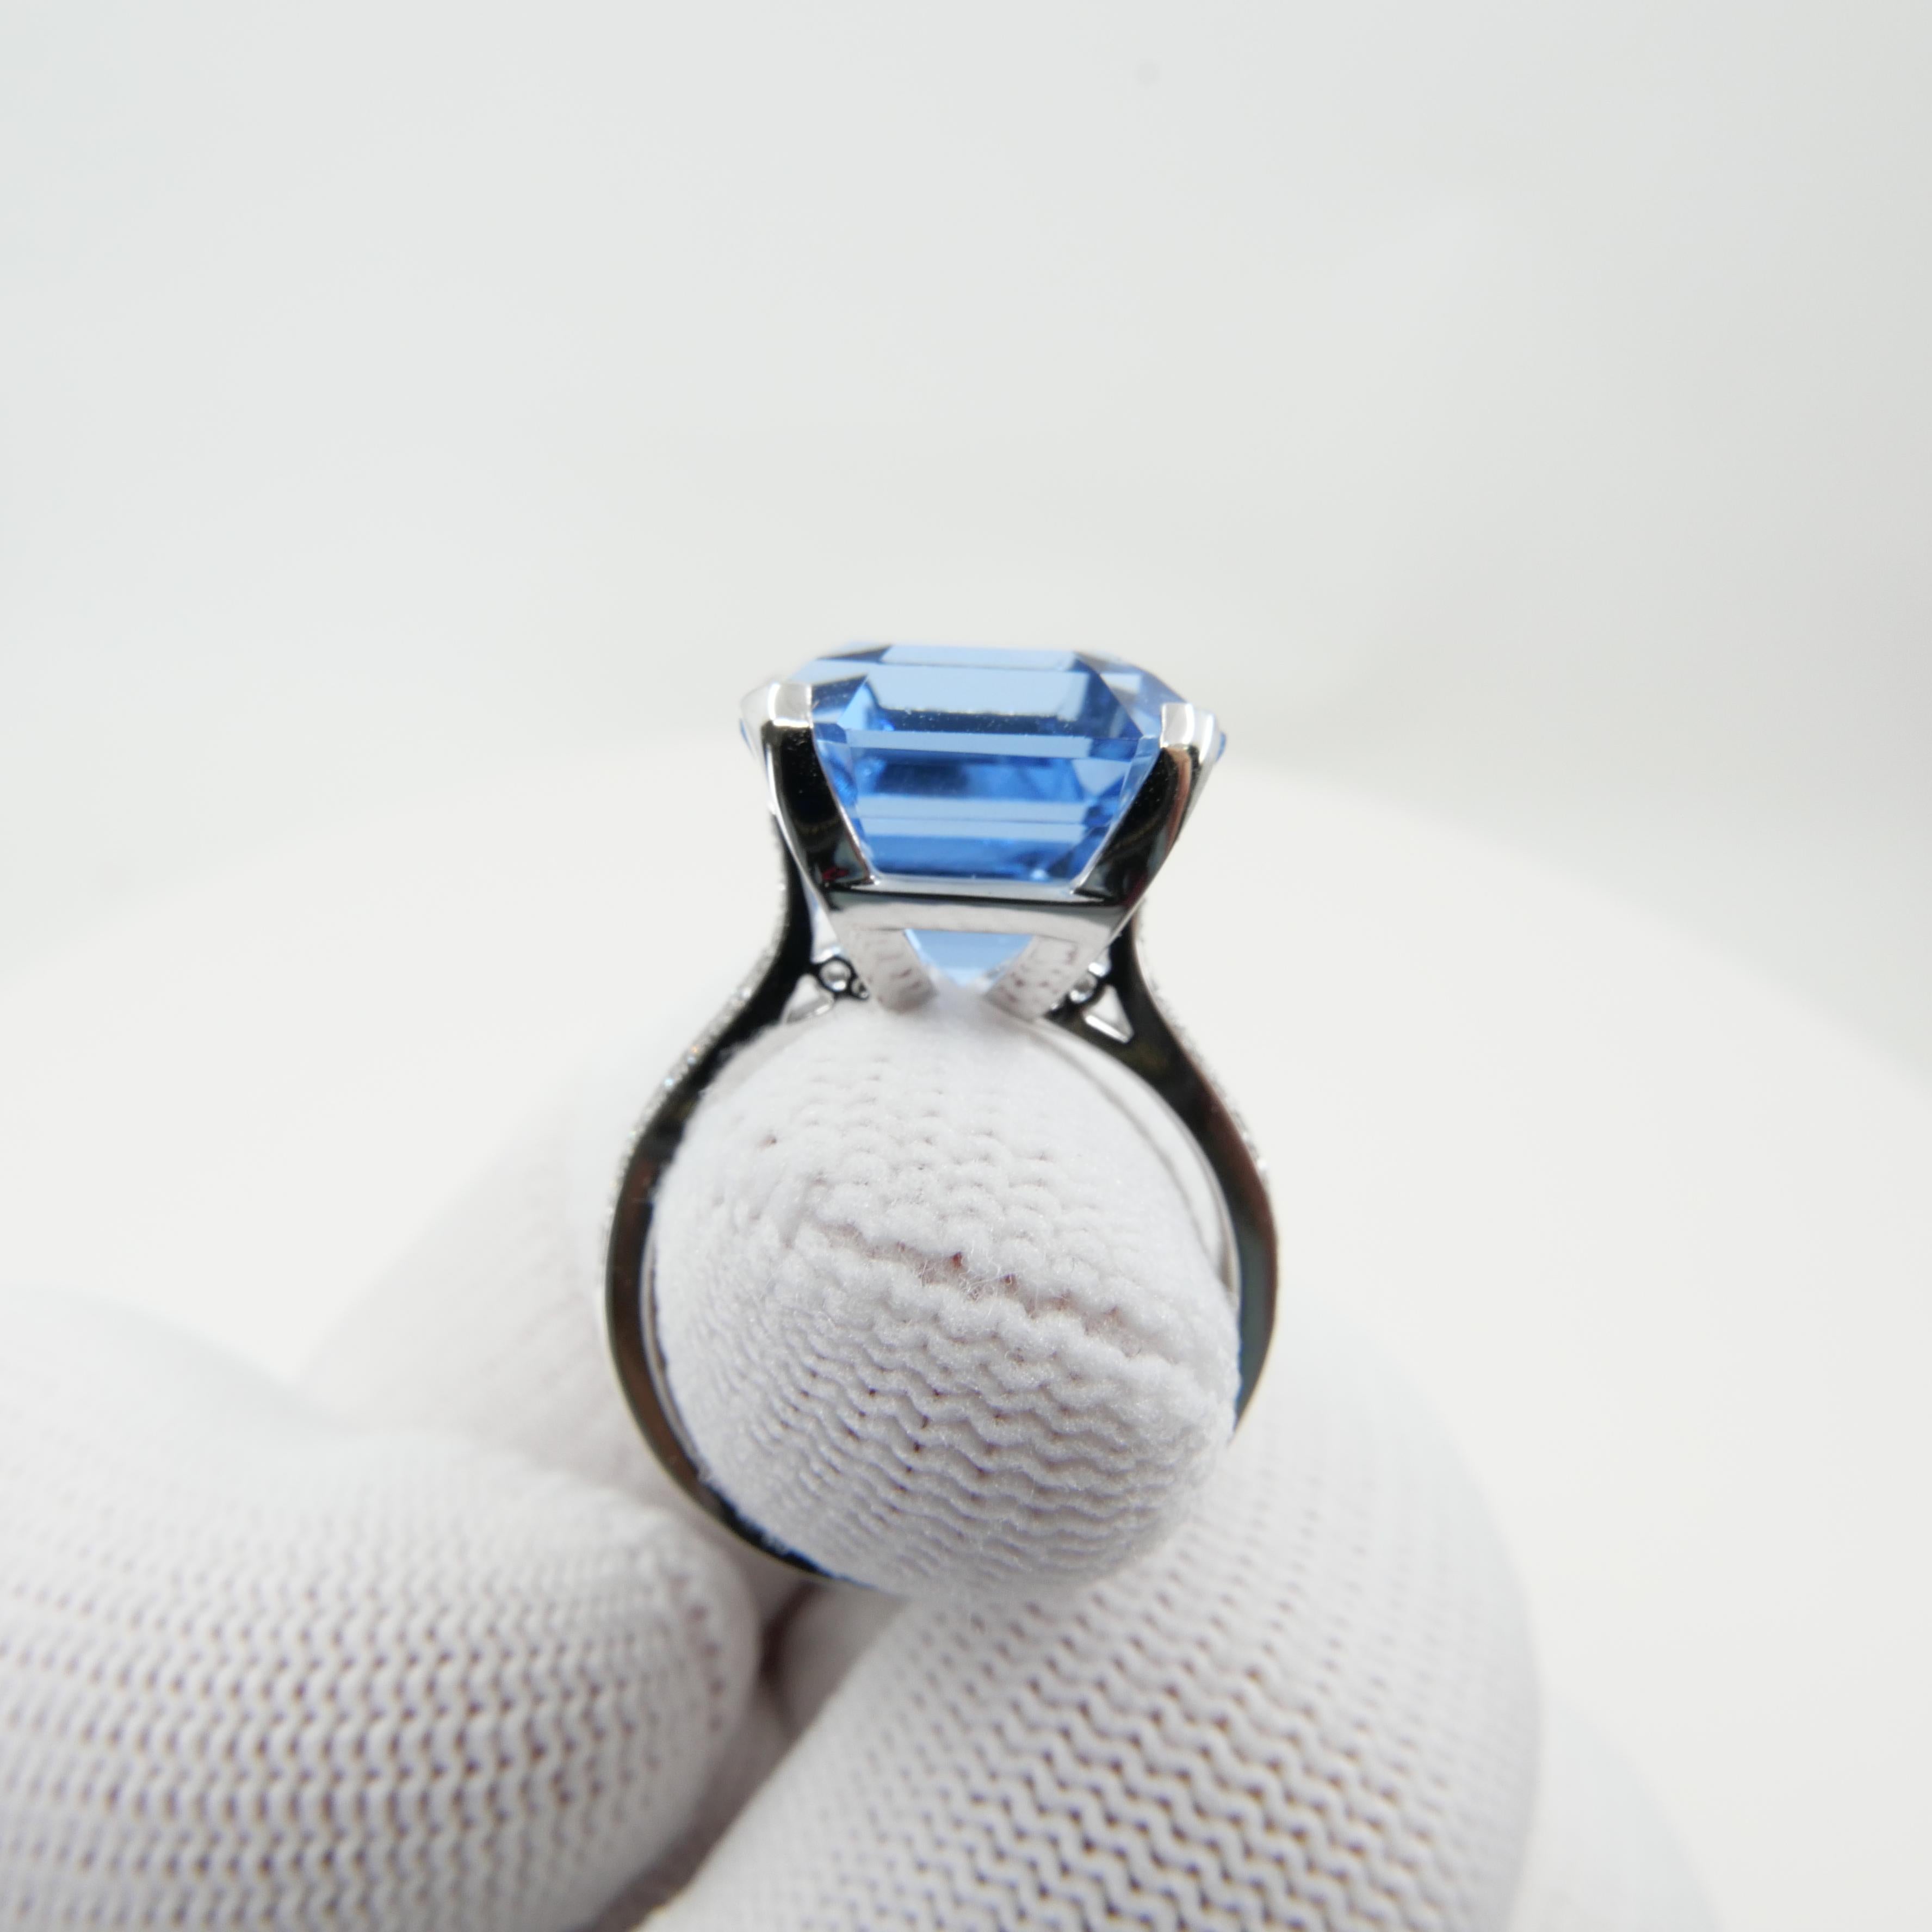 Certified 11.23 Cts Asscher Cut Aquamarine Diamond Ring, True Santa Maria Color 7